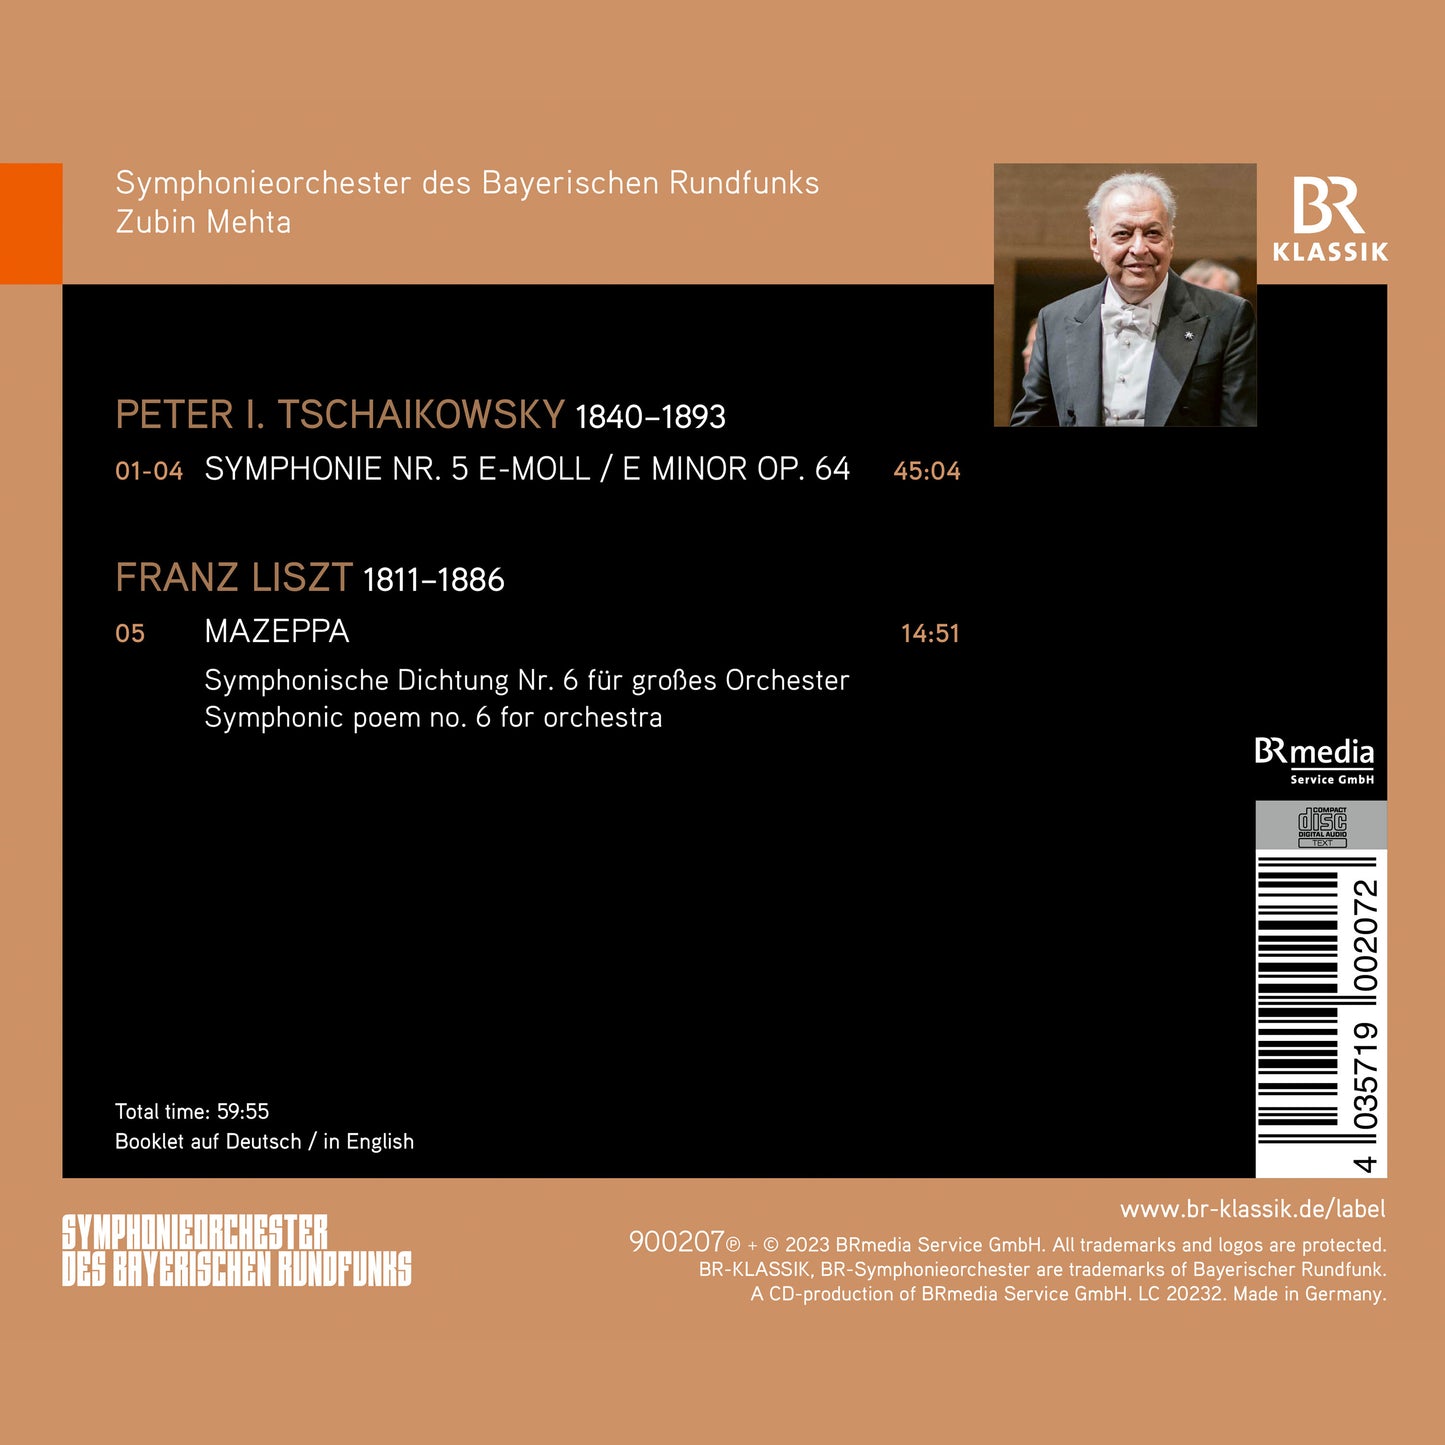 Tchaikovsky: Symphony No. 5 - Liszt: Mazeppa / Zubin Mehta